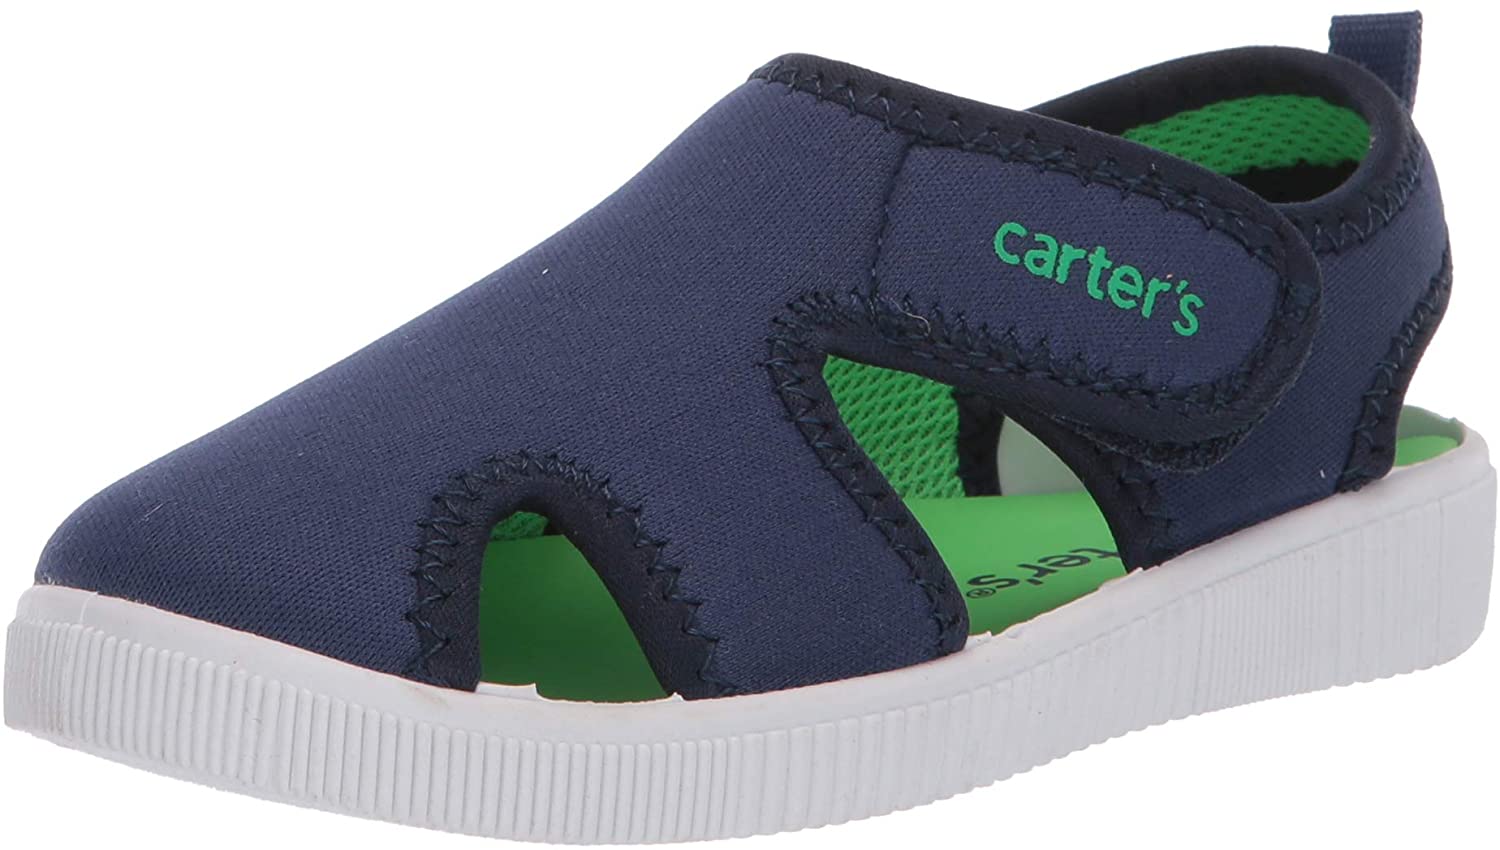 Carters Unisex-Child Troy Water Shoe Sport Sandal